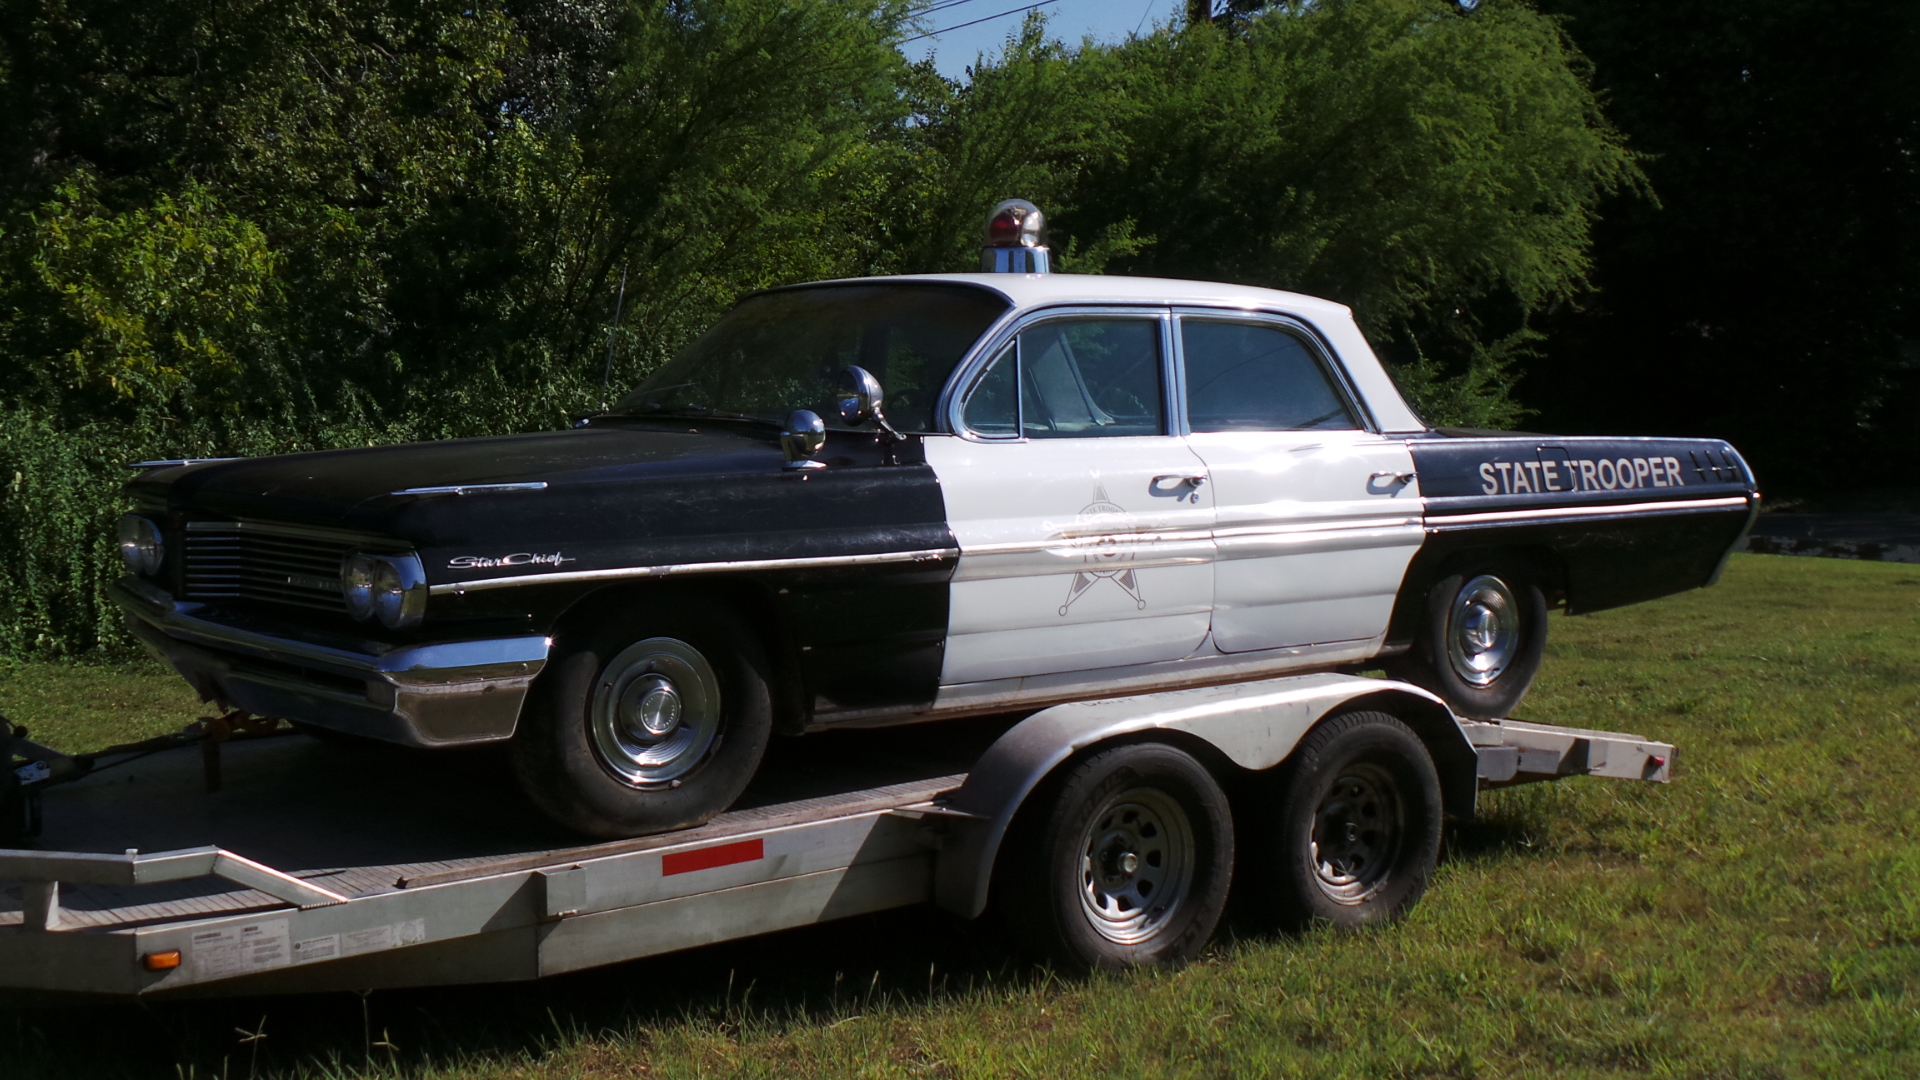 1962 PONTIAC STAR CHIEF HIGHWAY PATROL CAR – Texas Treasure Hunter